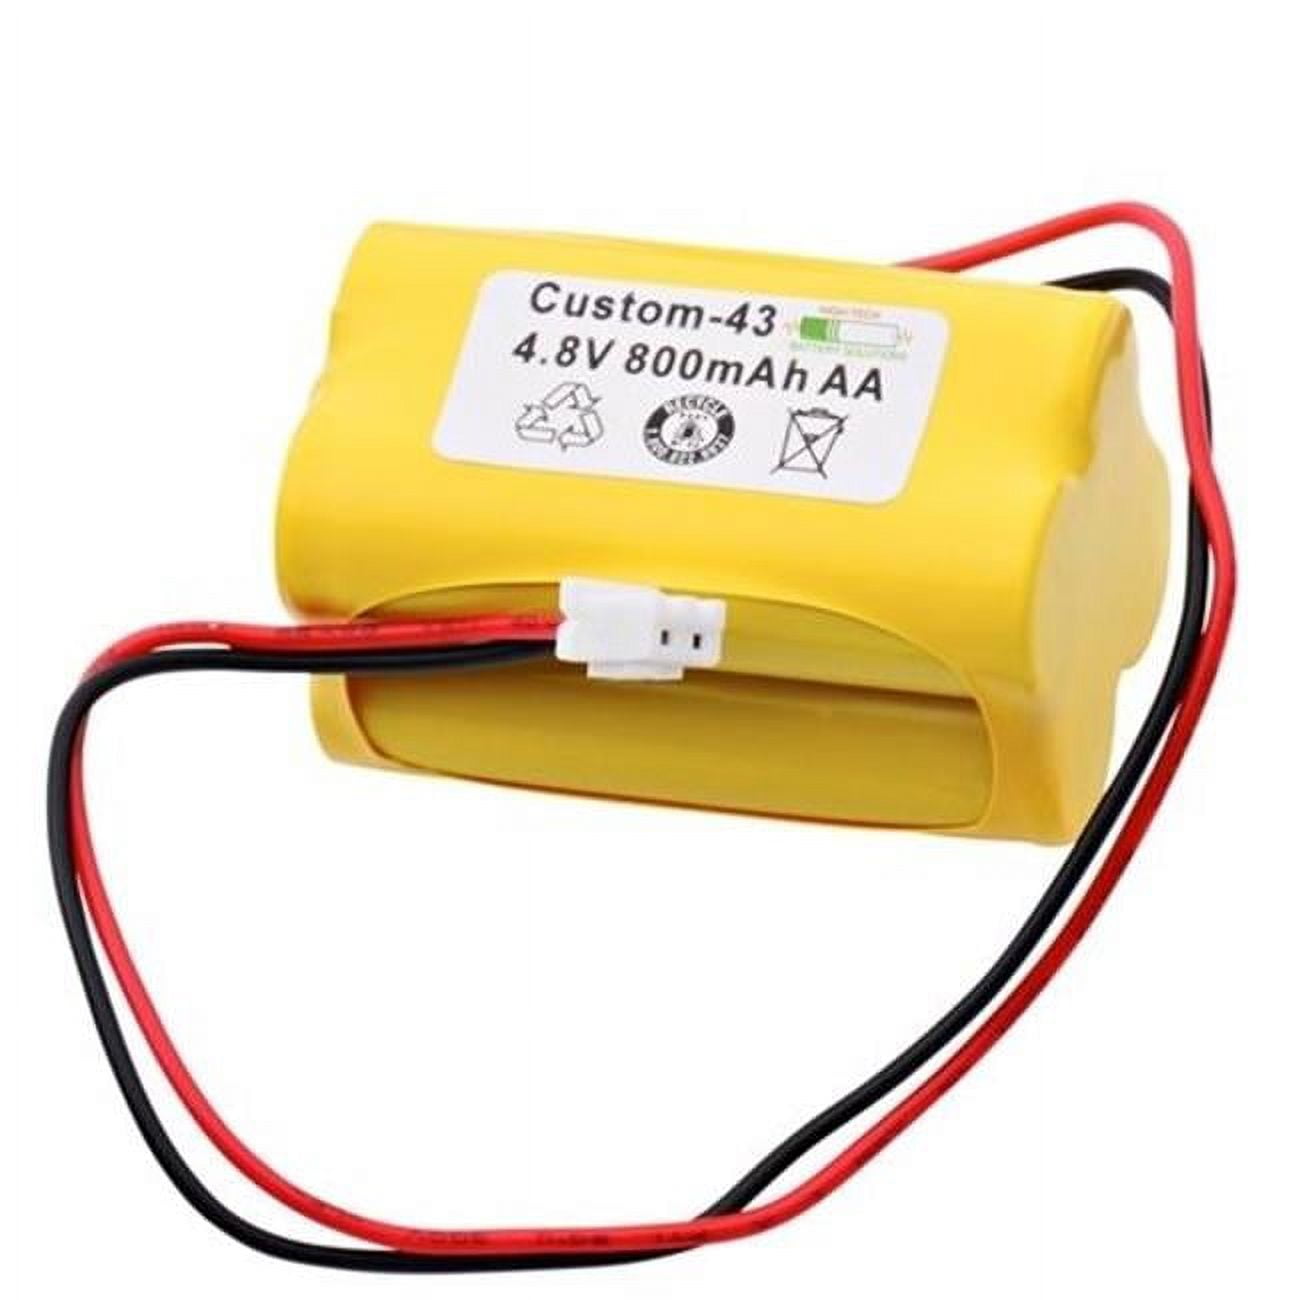 Picture of Dantona CUSTOM-48 1400mAh Emergency Lighting Battery